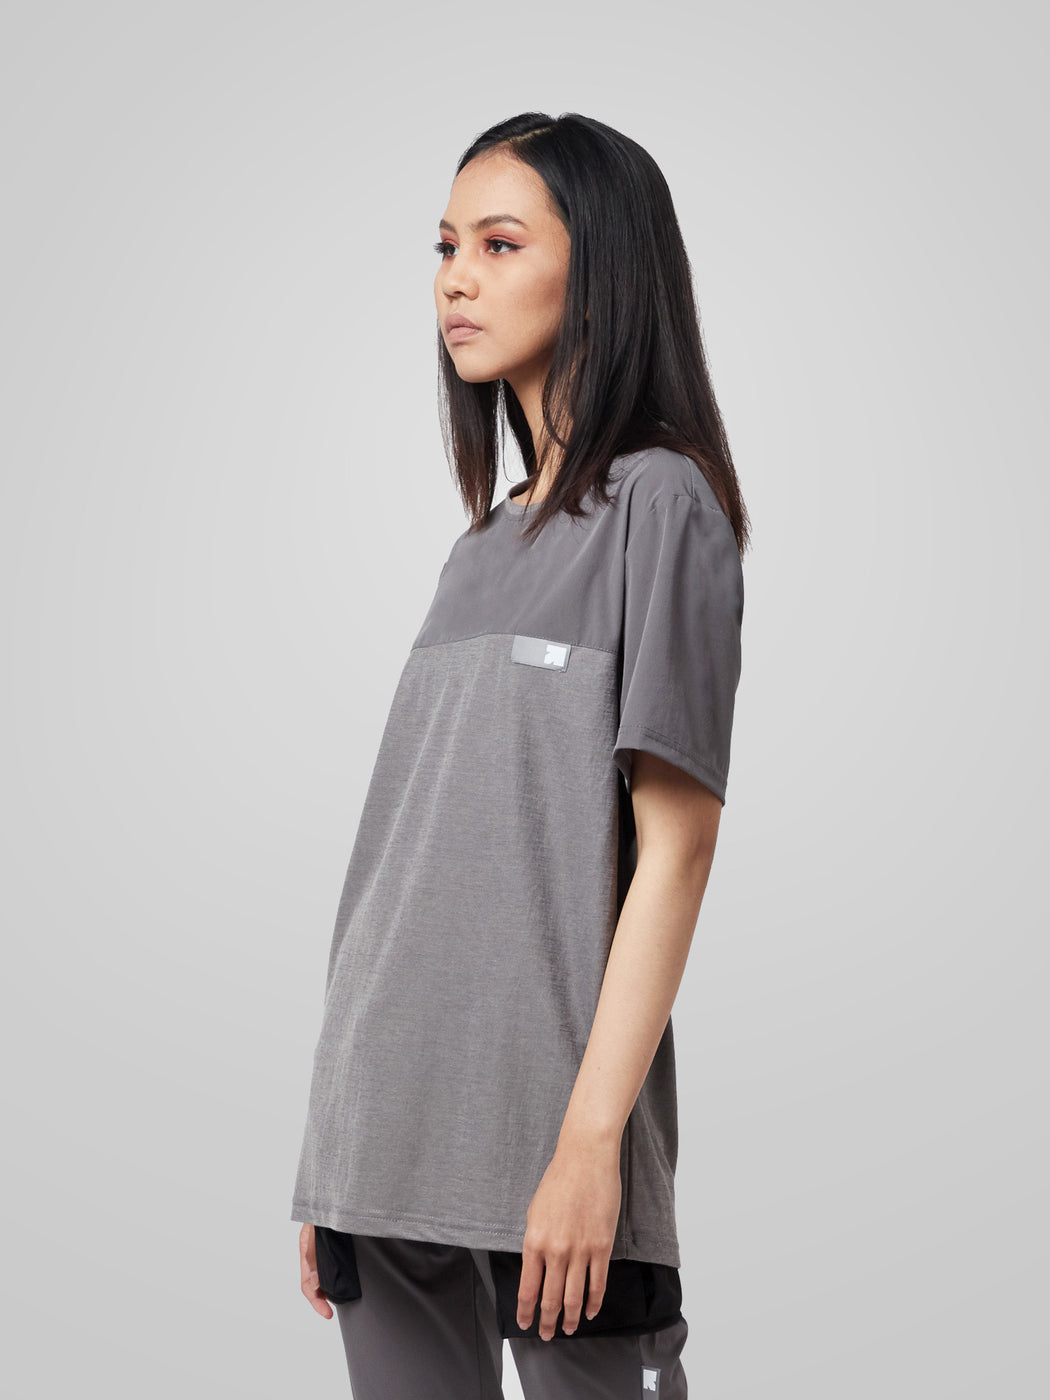 Unisex Ultimate Utilitarian Grey Female T-shirt